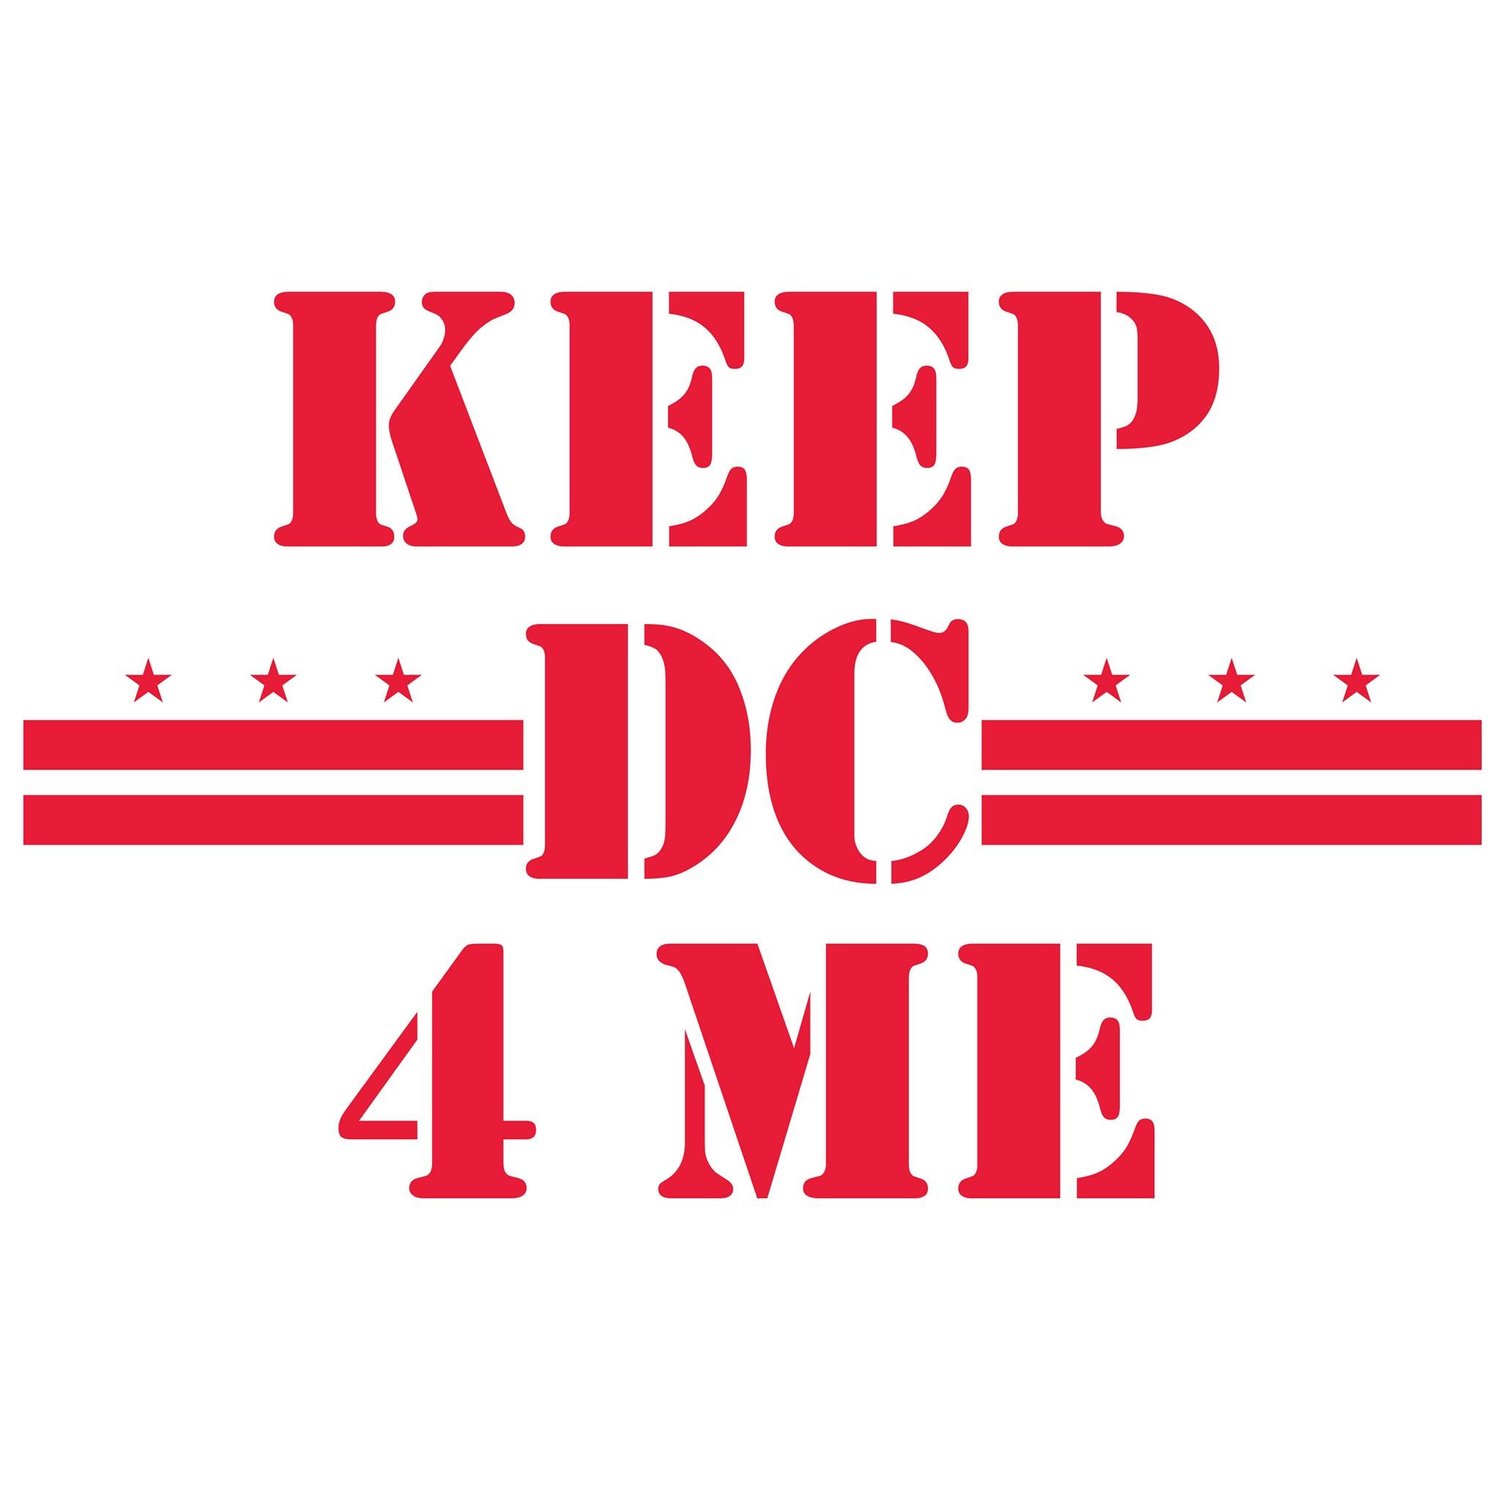 #KeepDC4Me